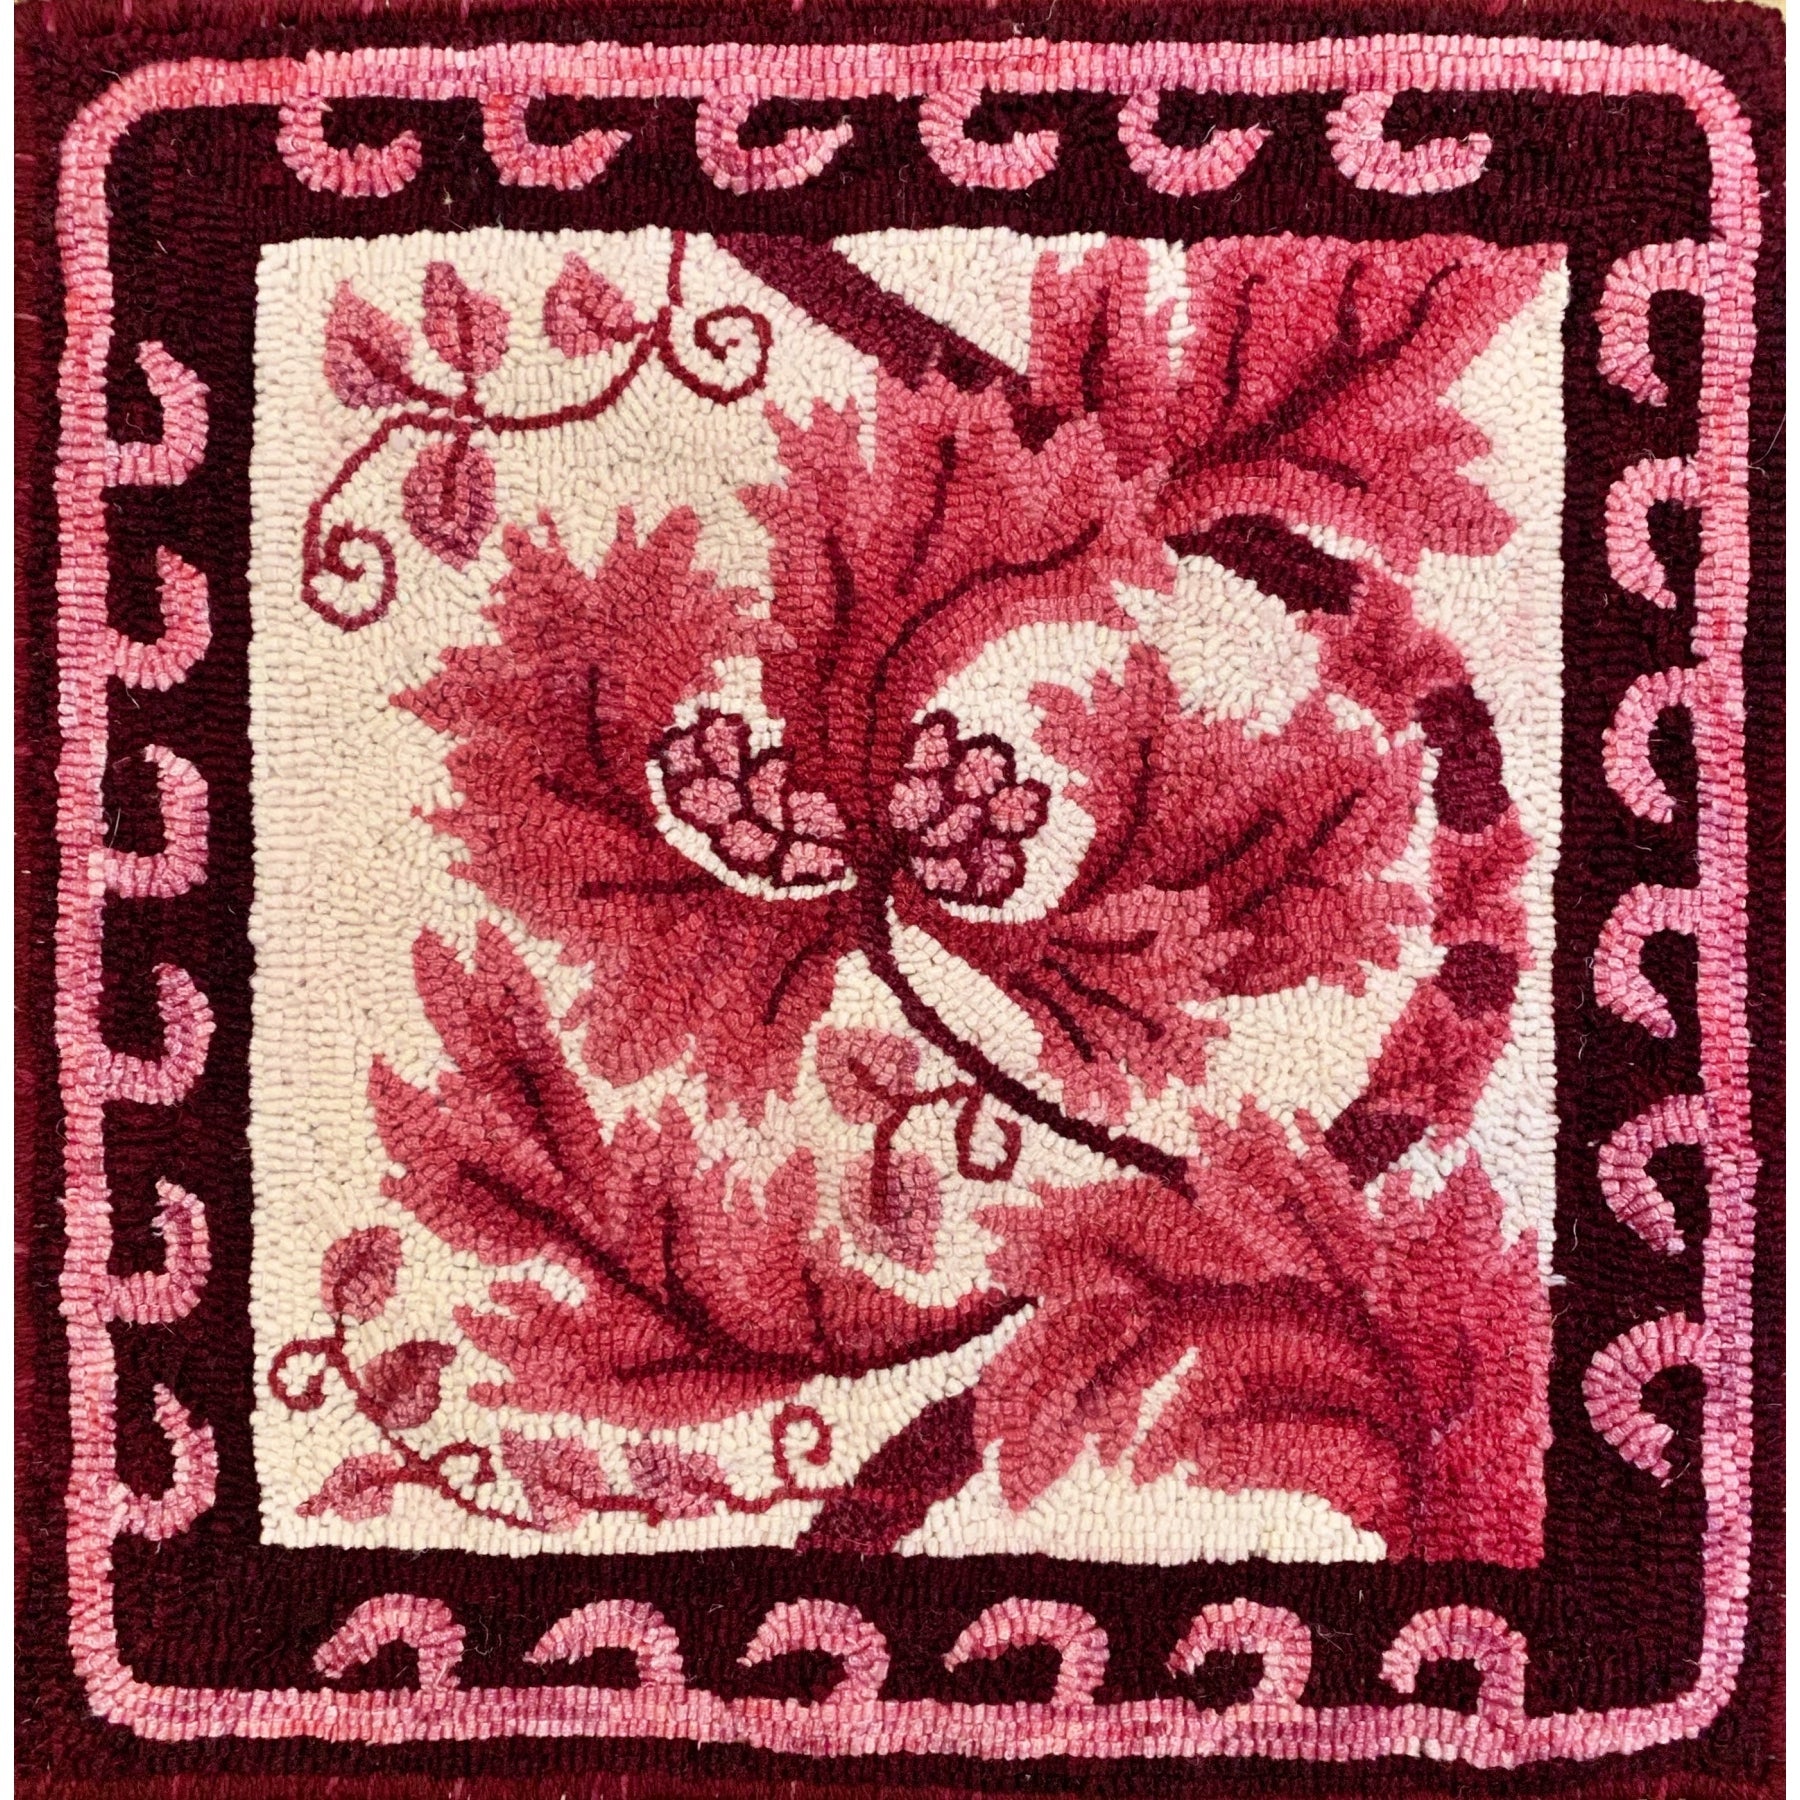 William Morris, rug hooked by Margaret Bedle